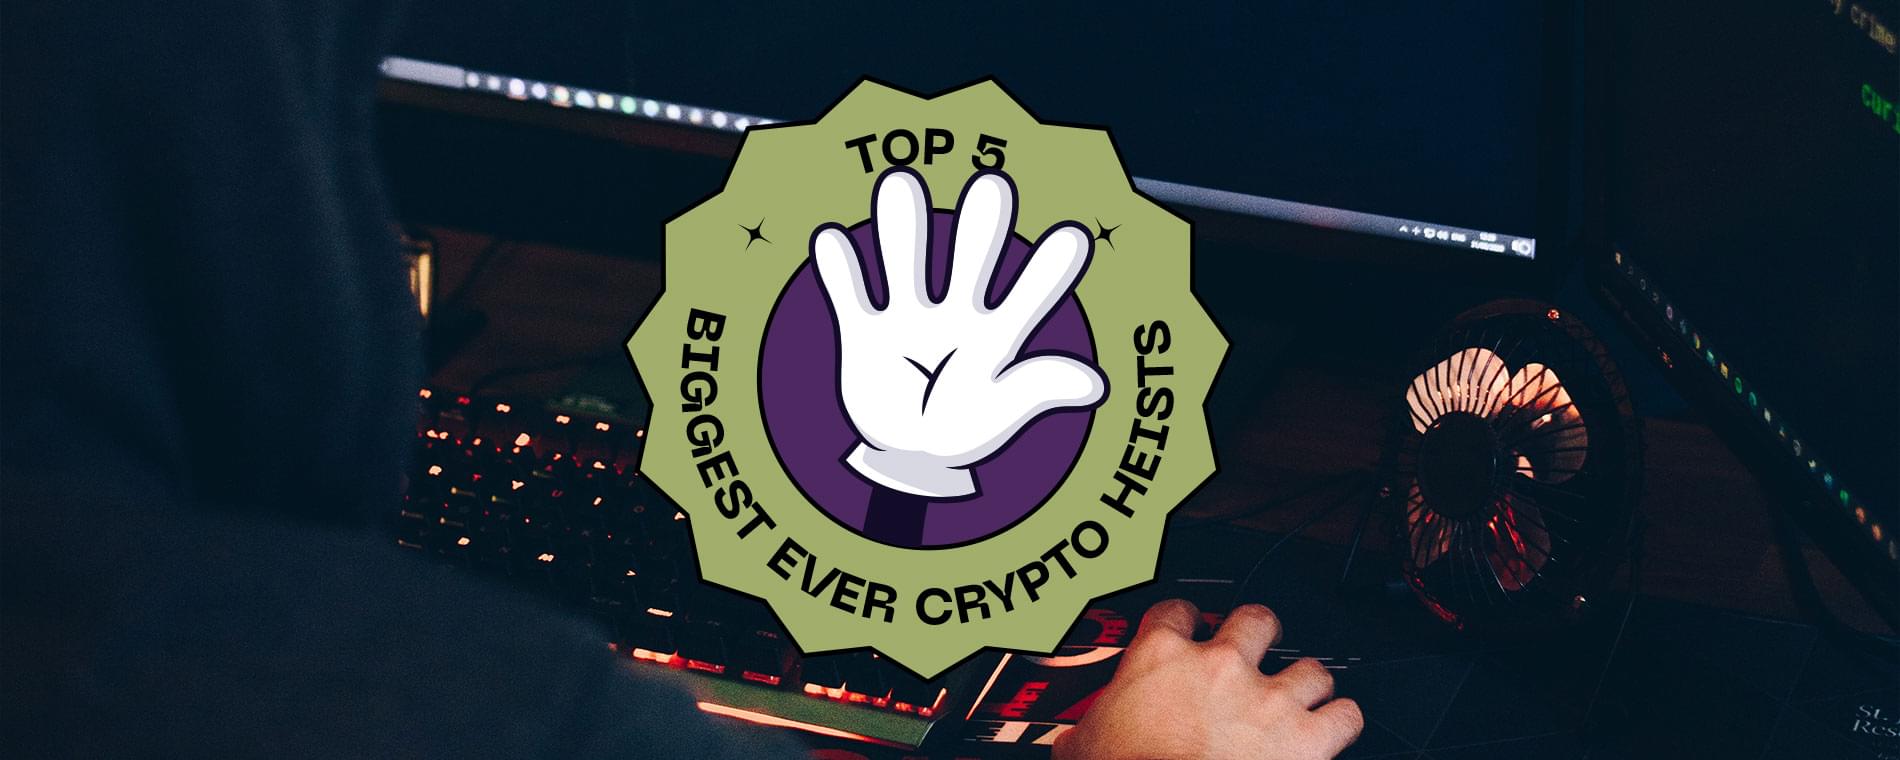 Top 5 biggest ever crypto heists